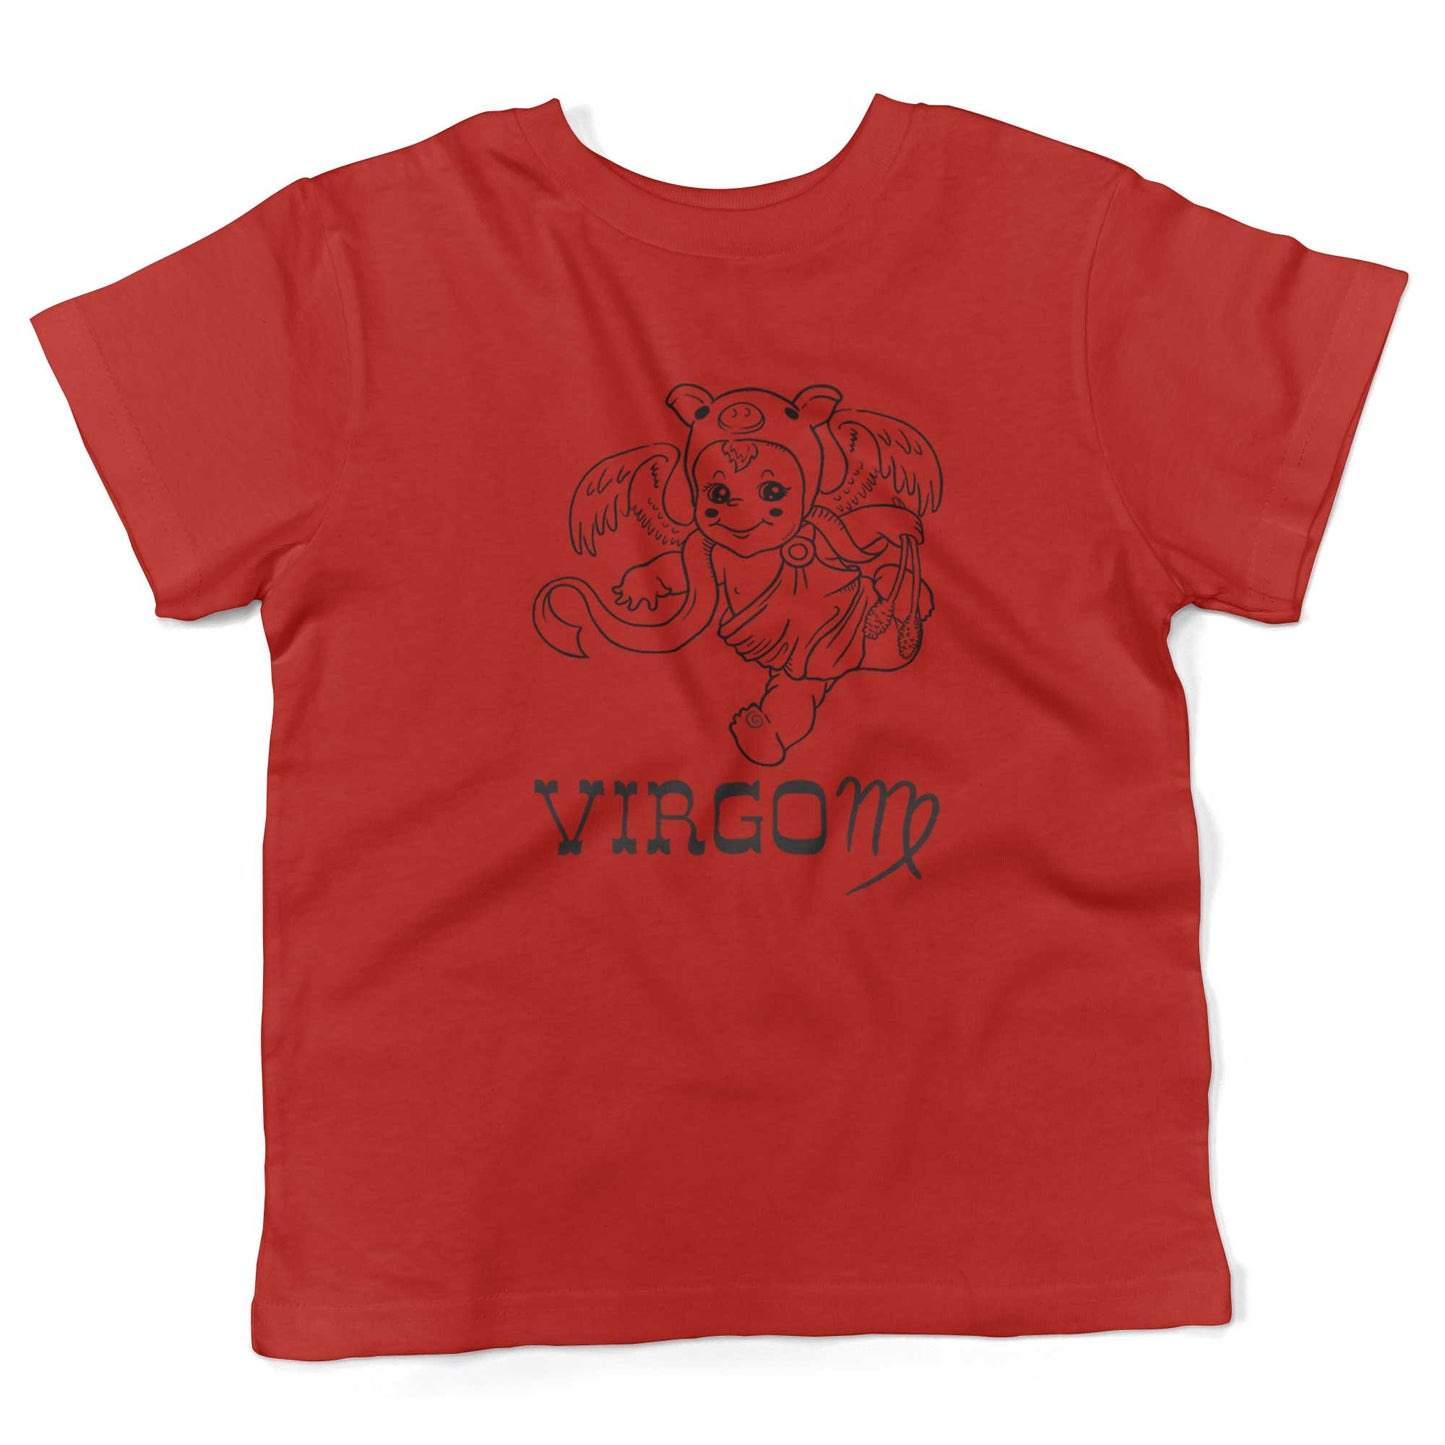 Virgo Cotton Toddler Shirt